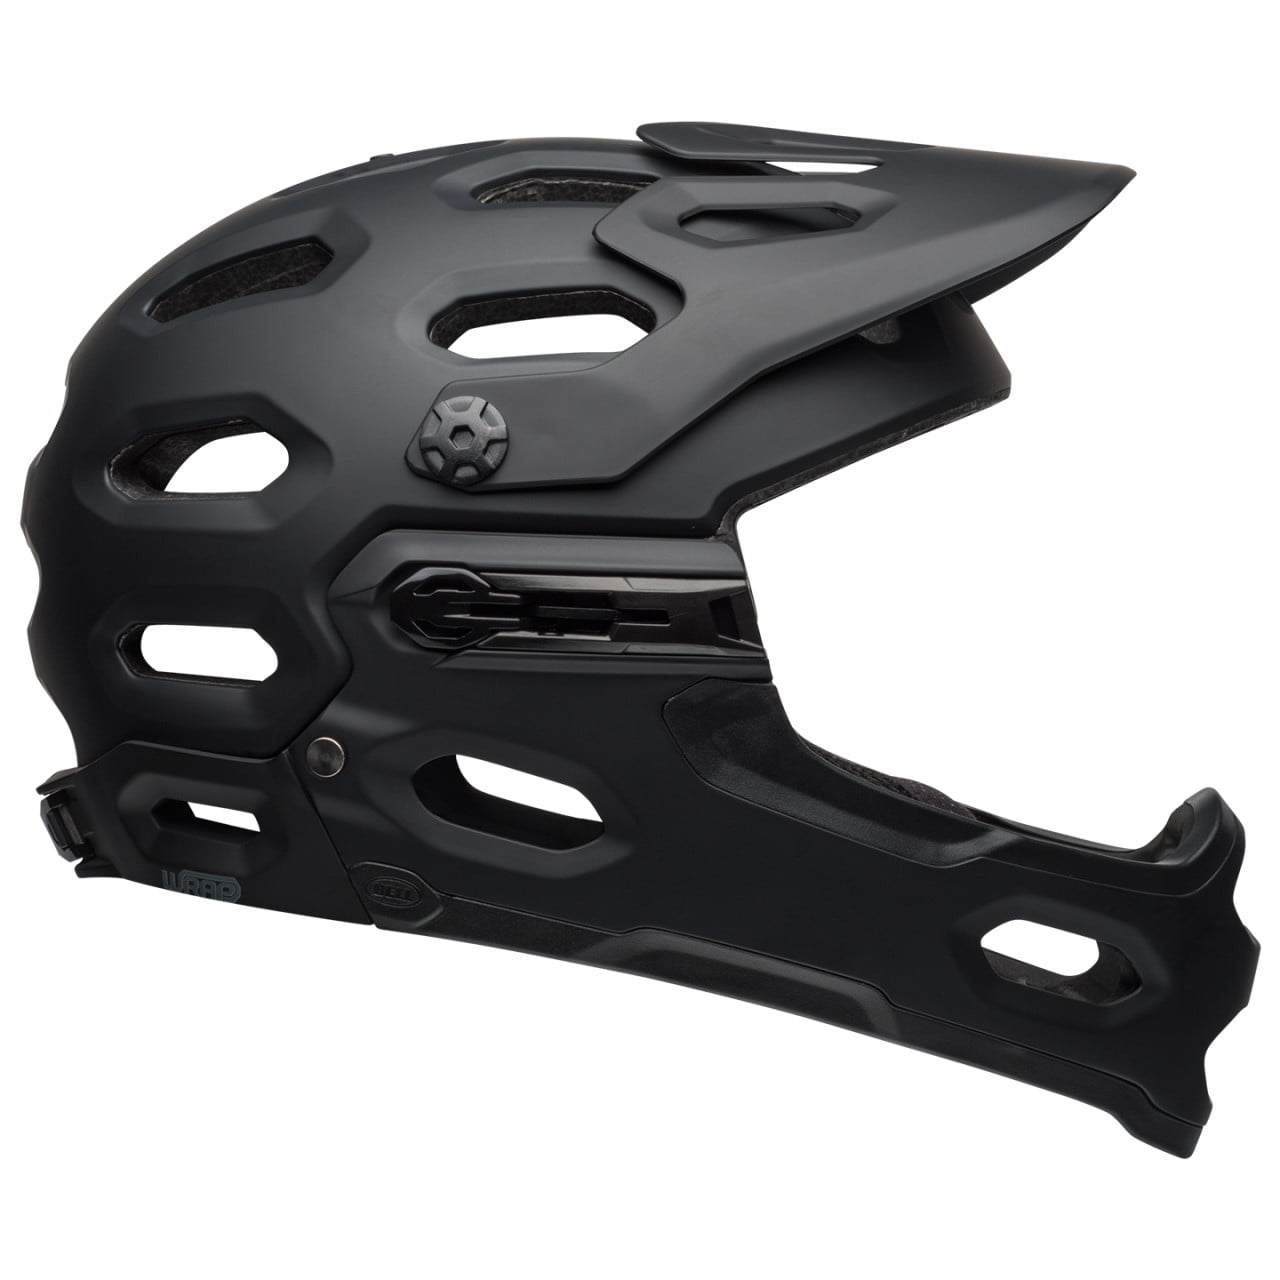 Super 3R Mips Full Face Cycling Helmet